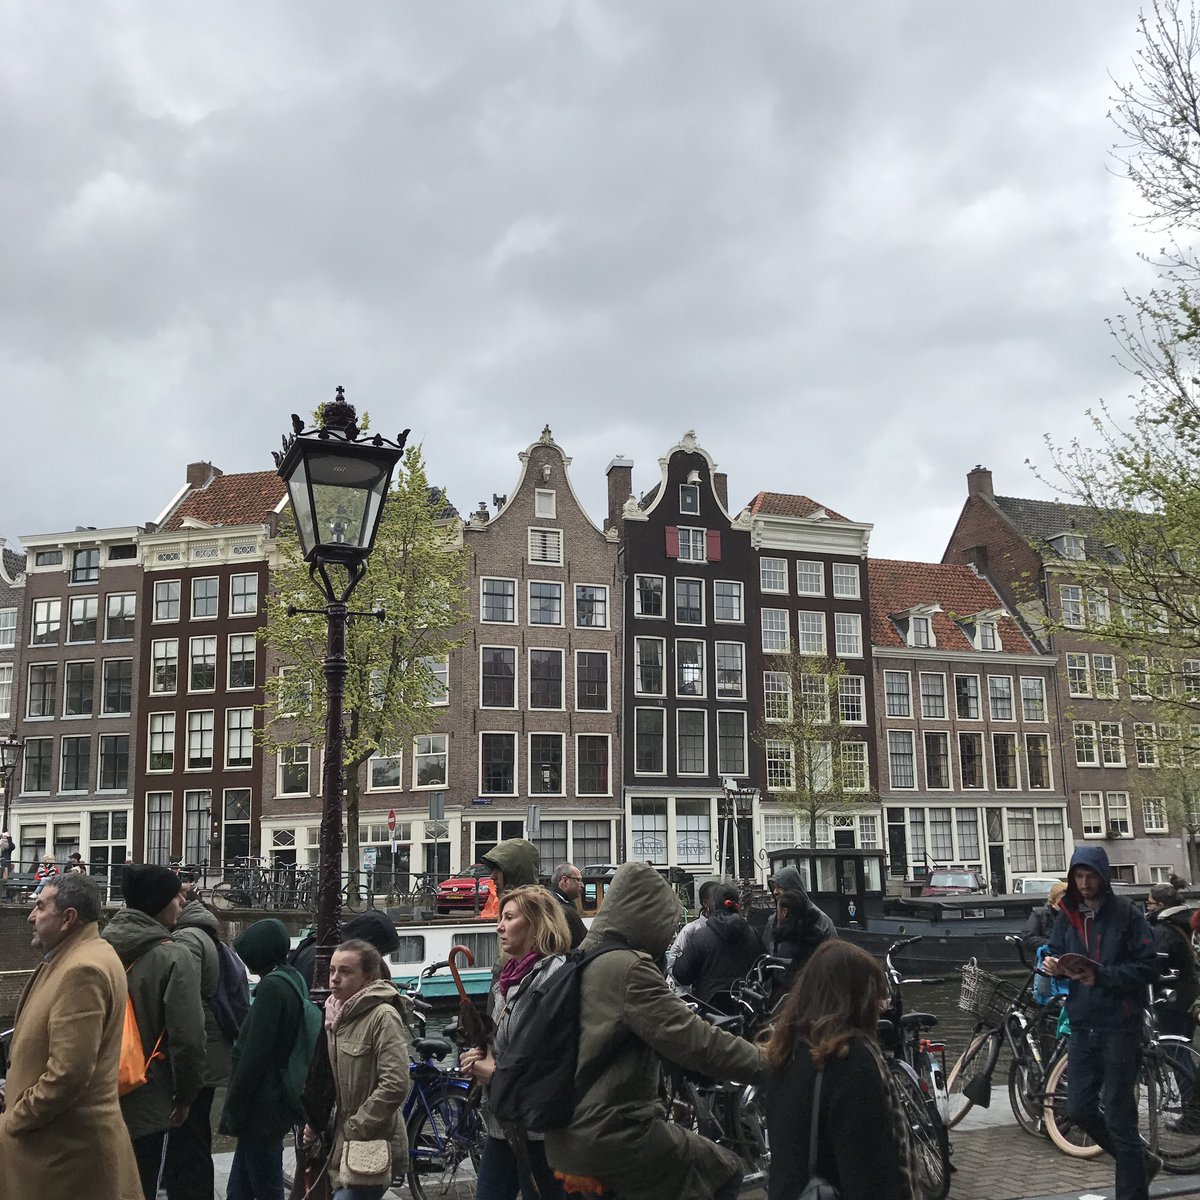  Amsterdam, Netherlands 